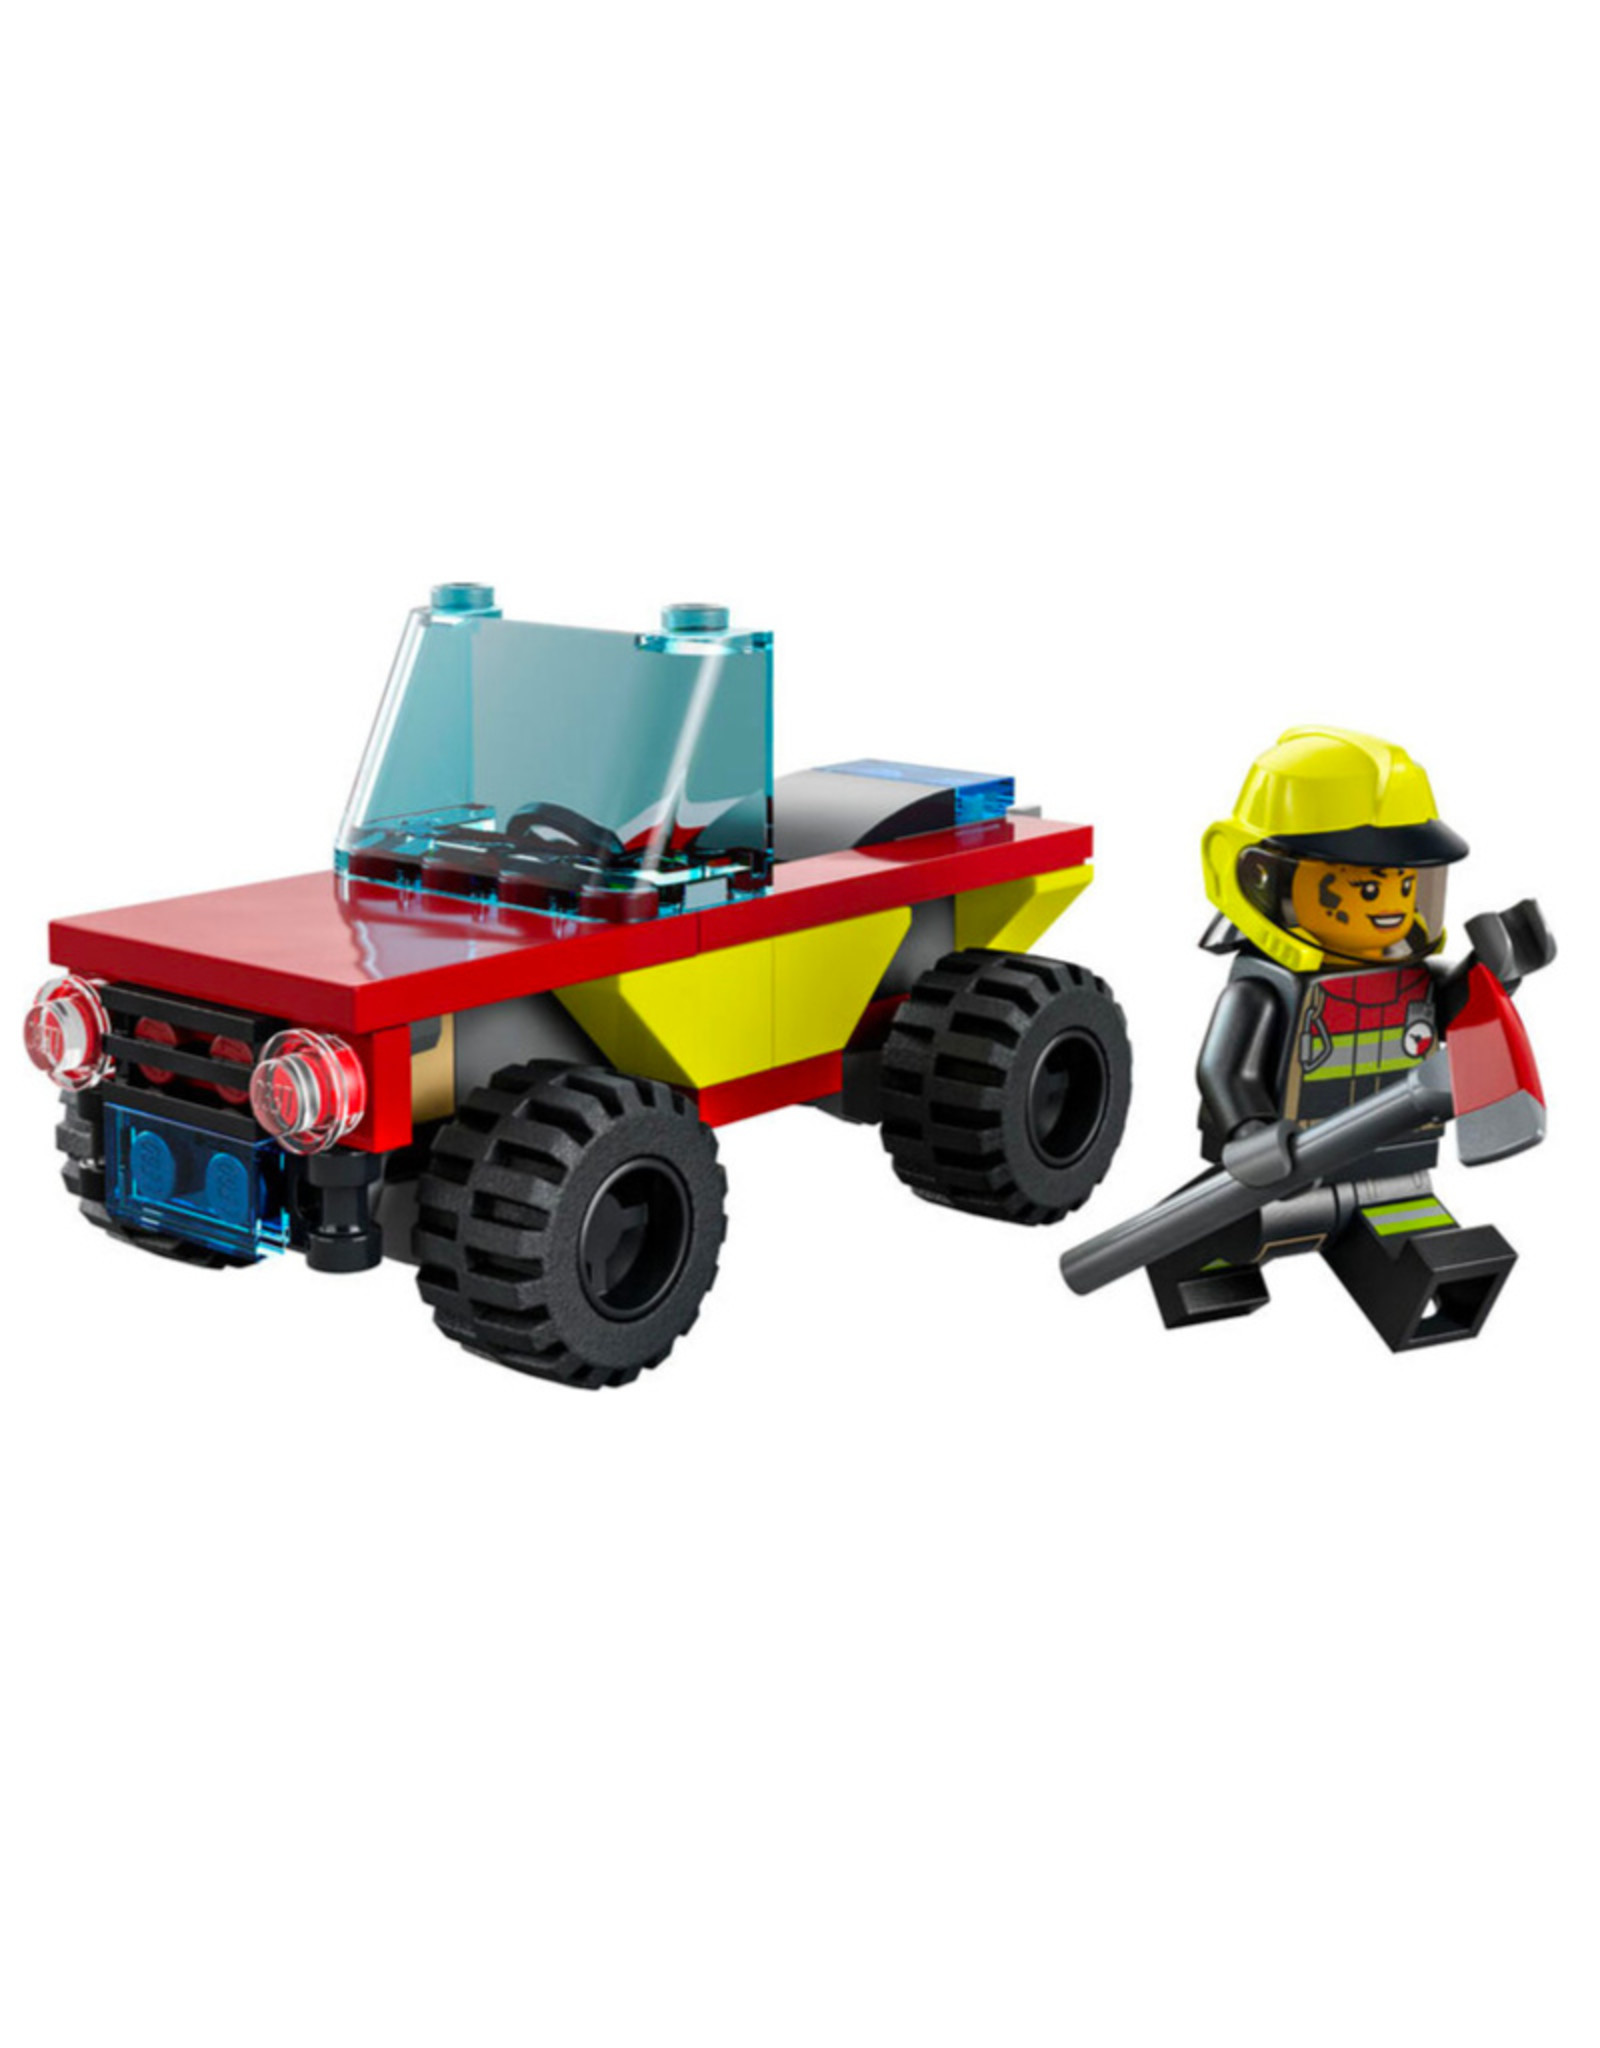 LEGO City 30585 Fire Patrol Vehicle